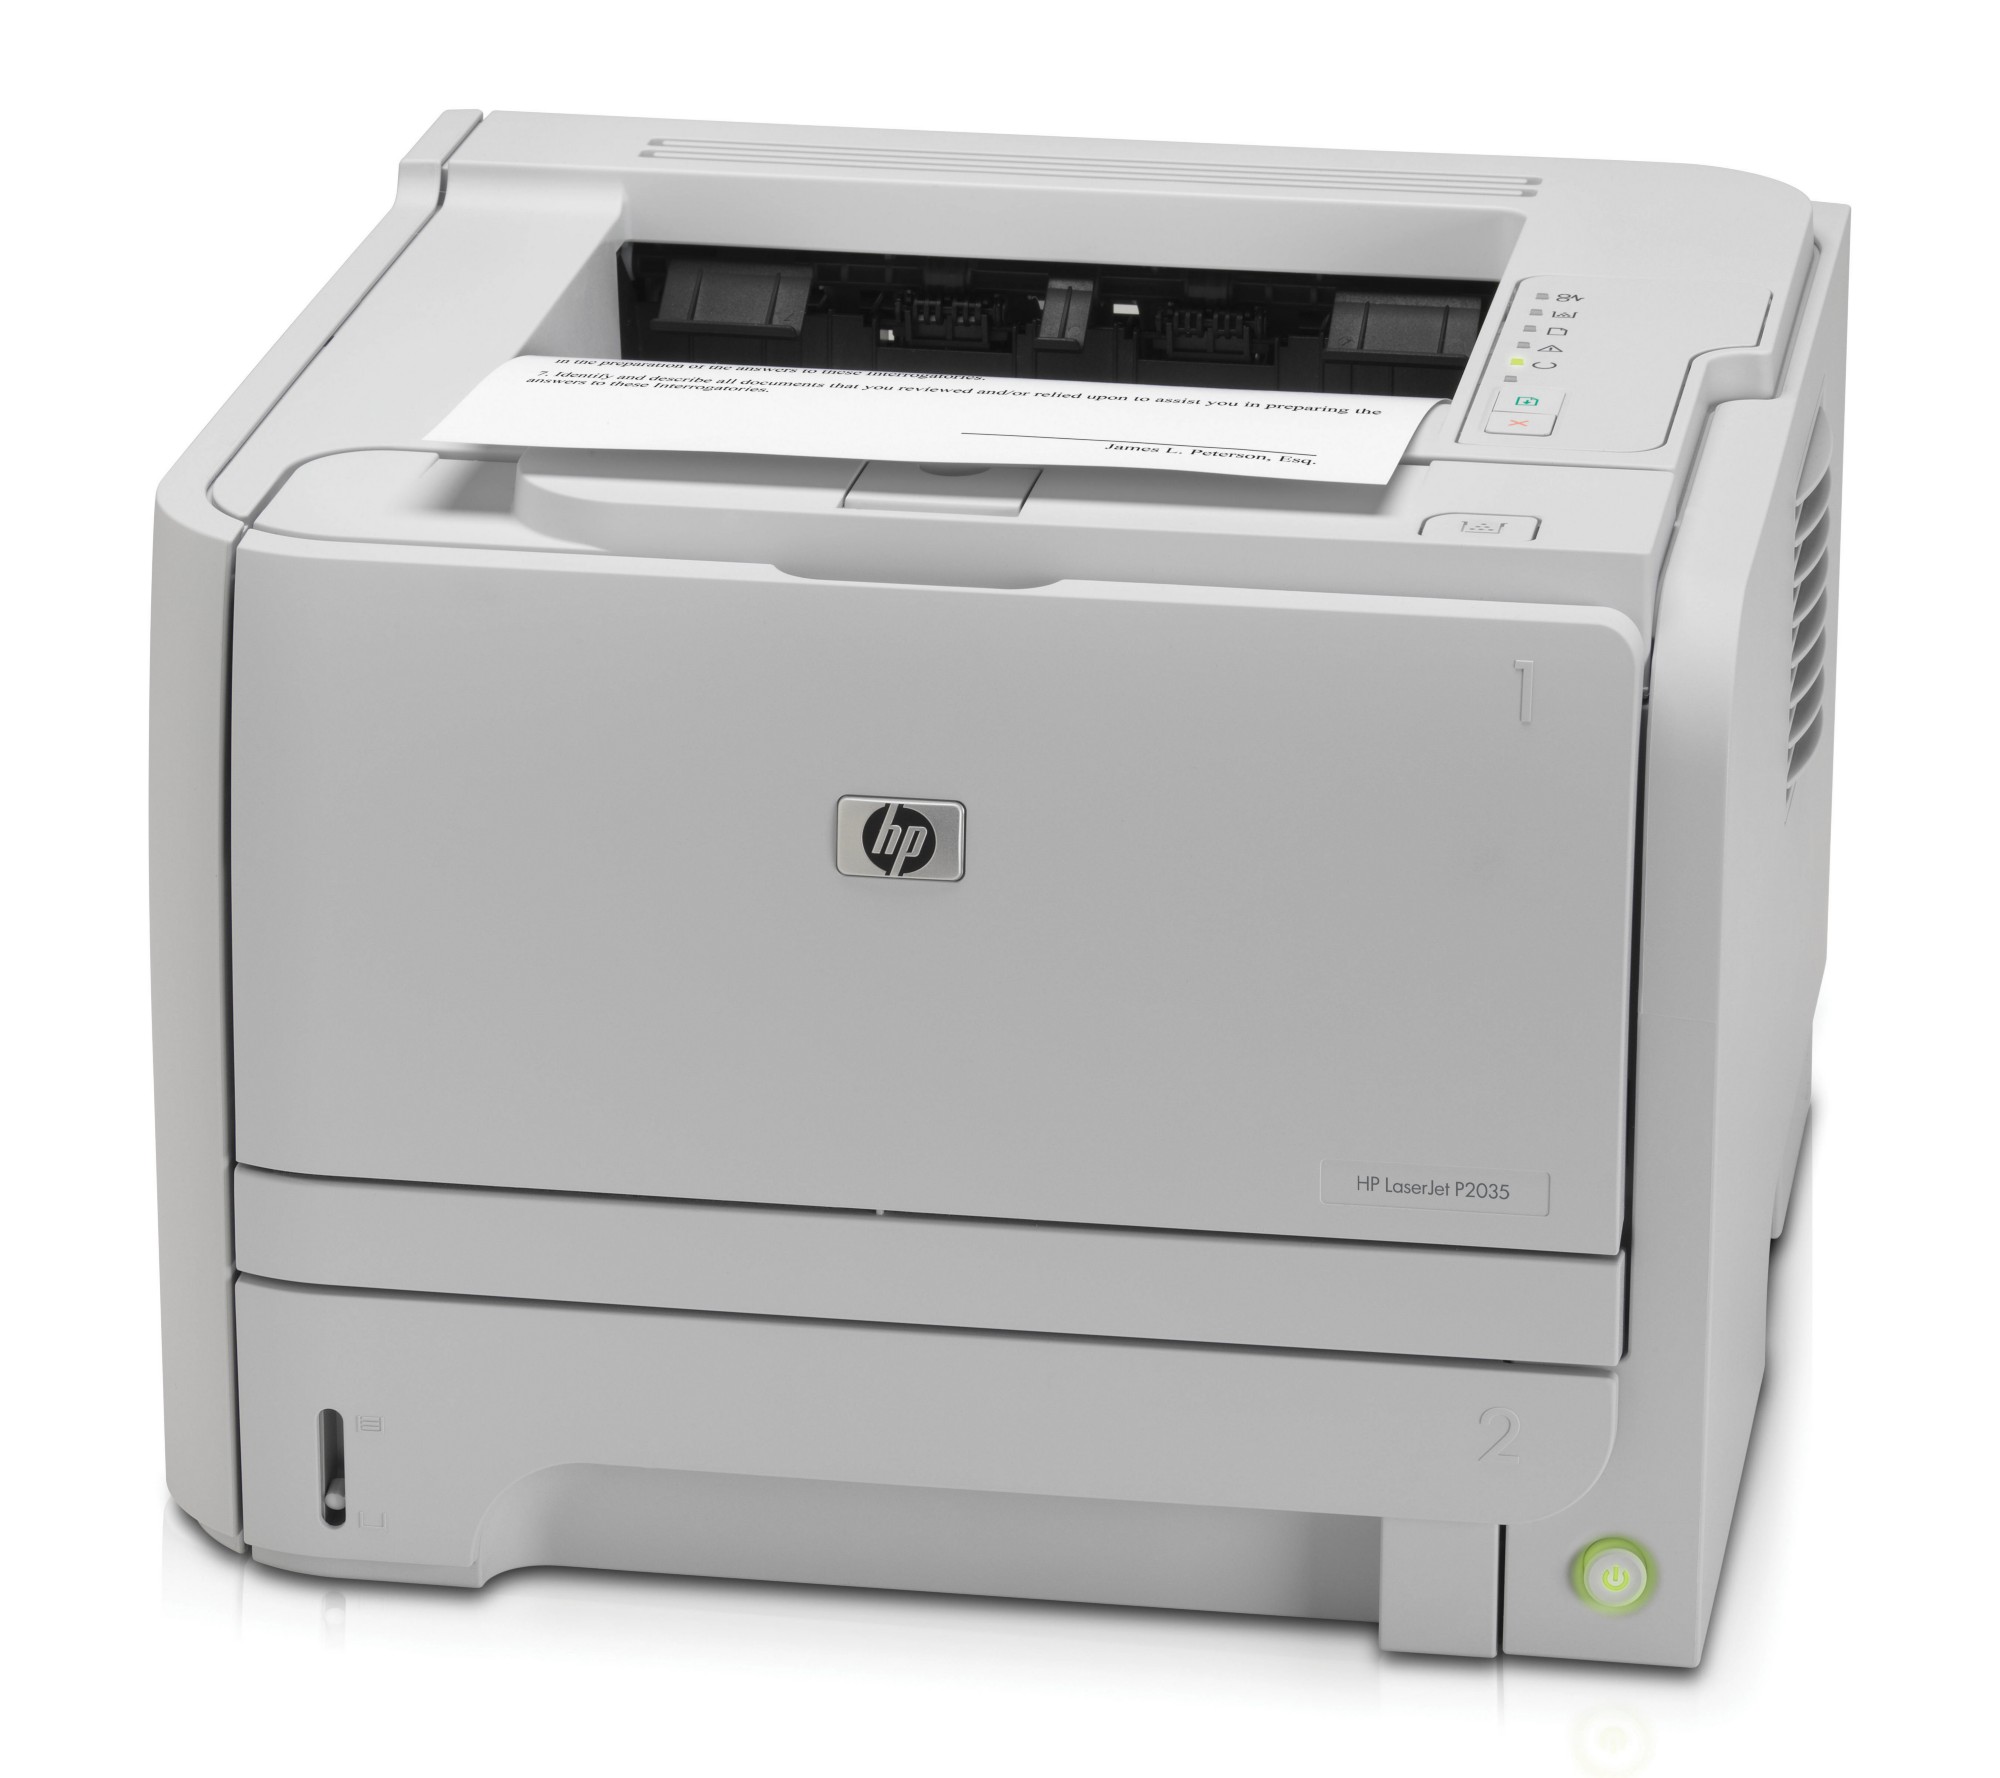 hp laserjet p2035n printer driver download for windows 7 32 bit